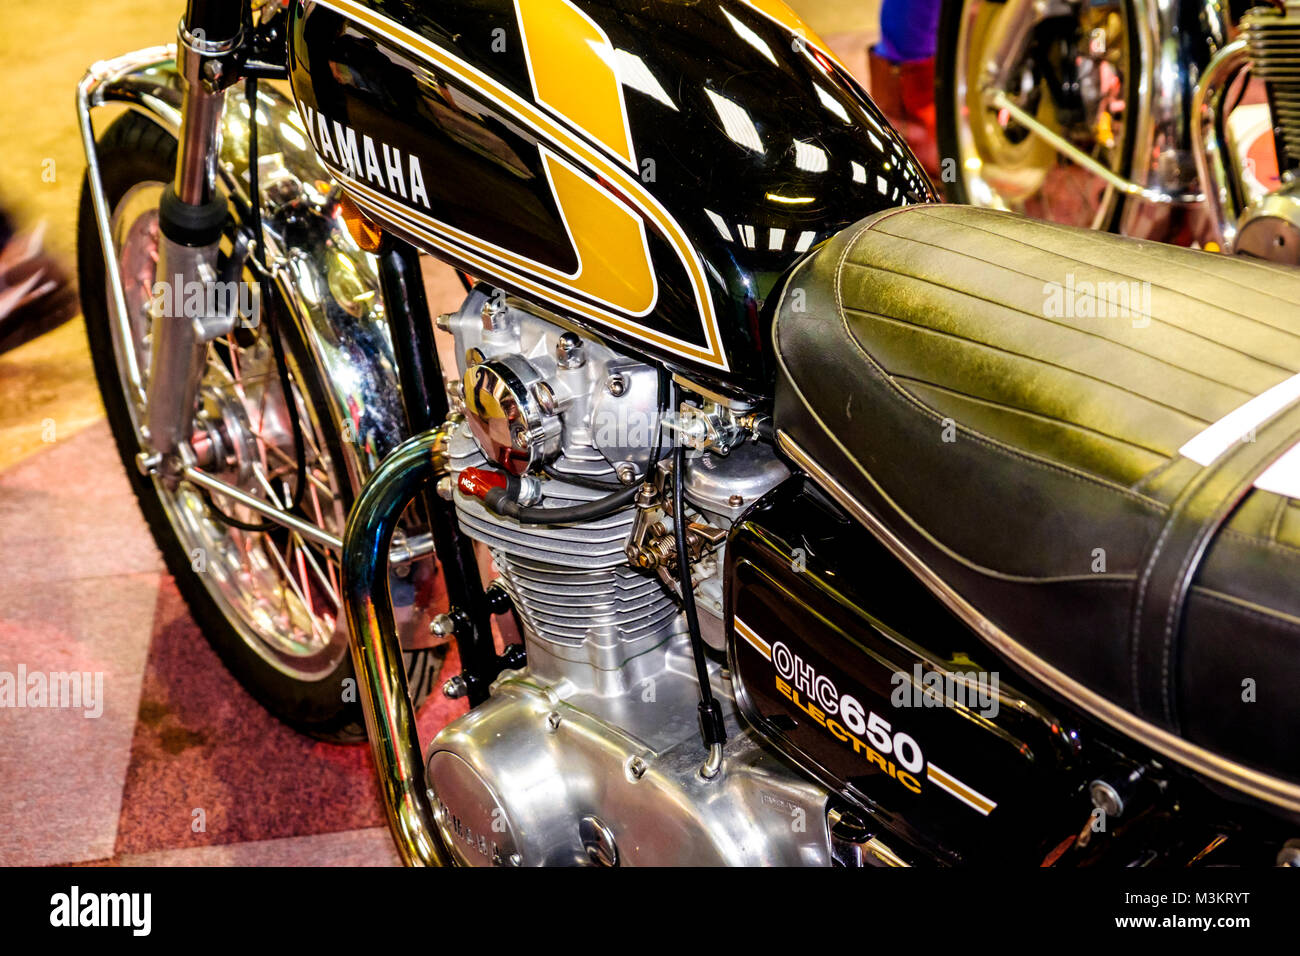 Yamaha motorcycle wheel hi-res stock photography and images - Alamy